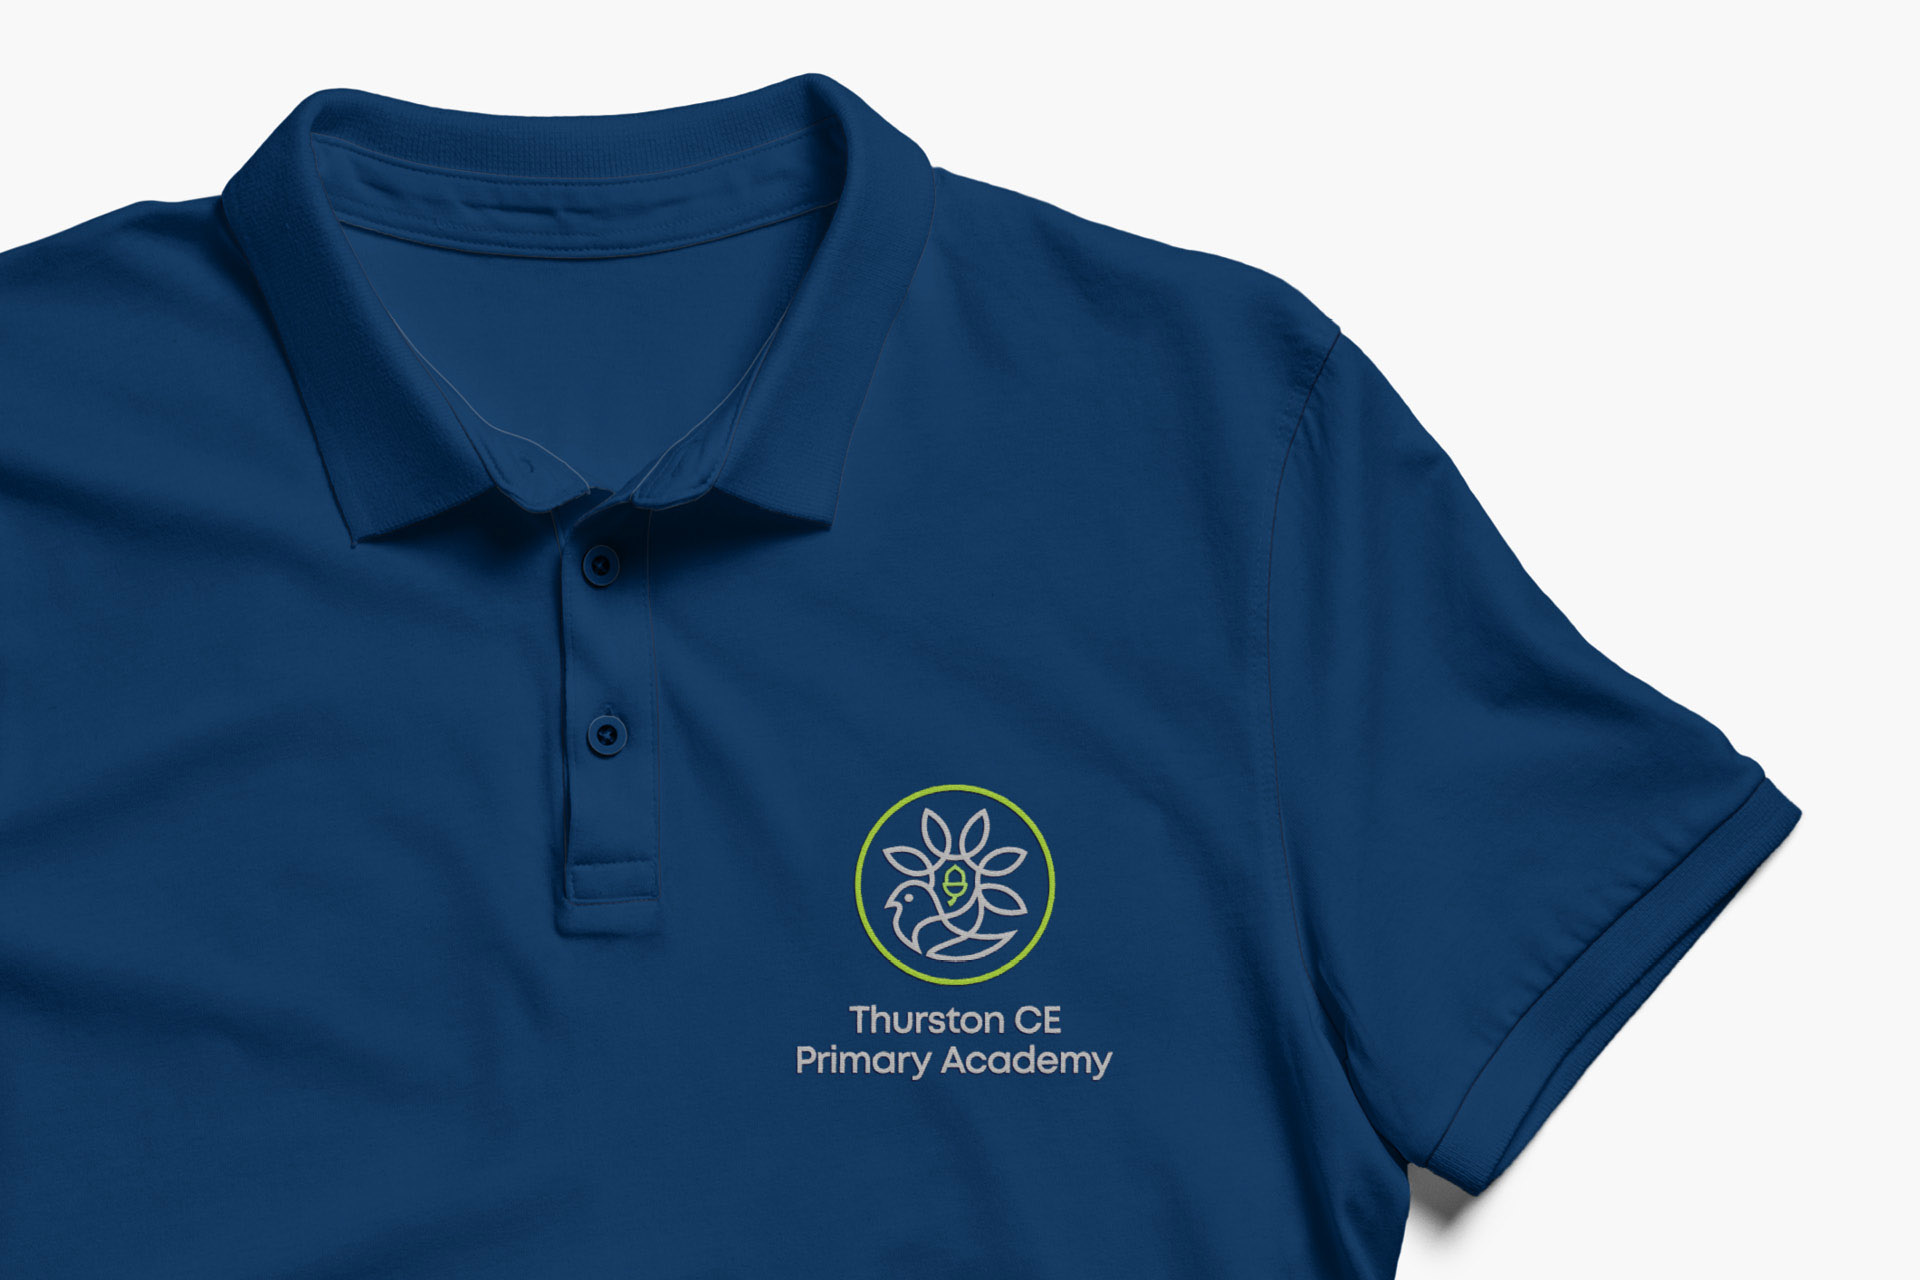 Branding and logo design Thurston Primary Academy School uniform embroidery